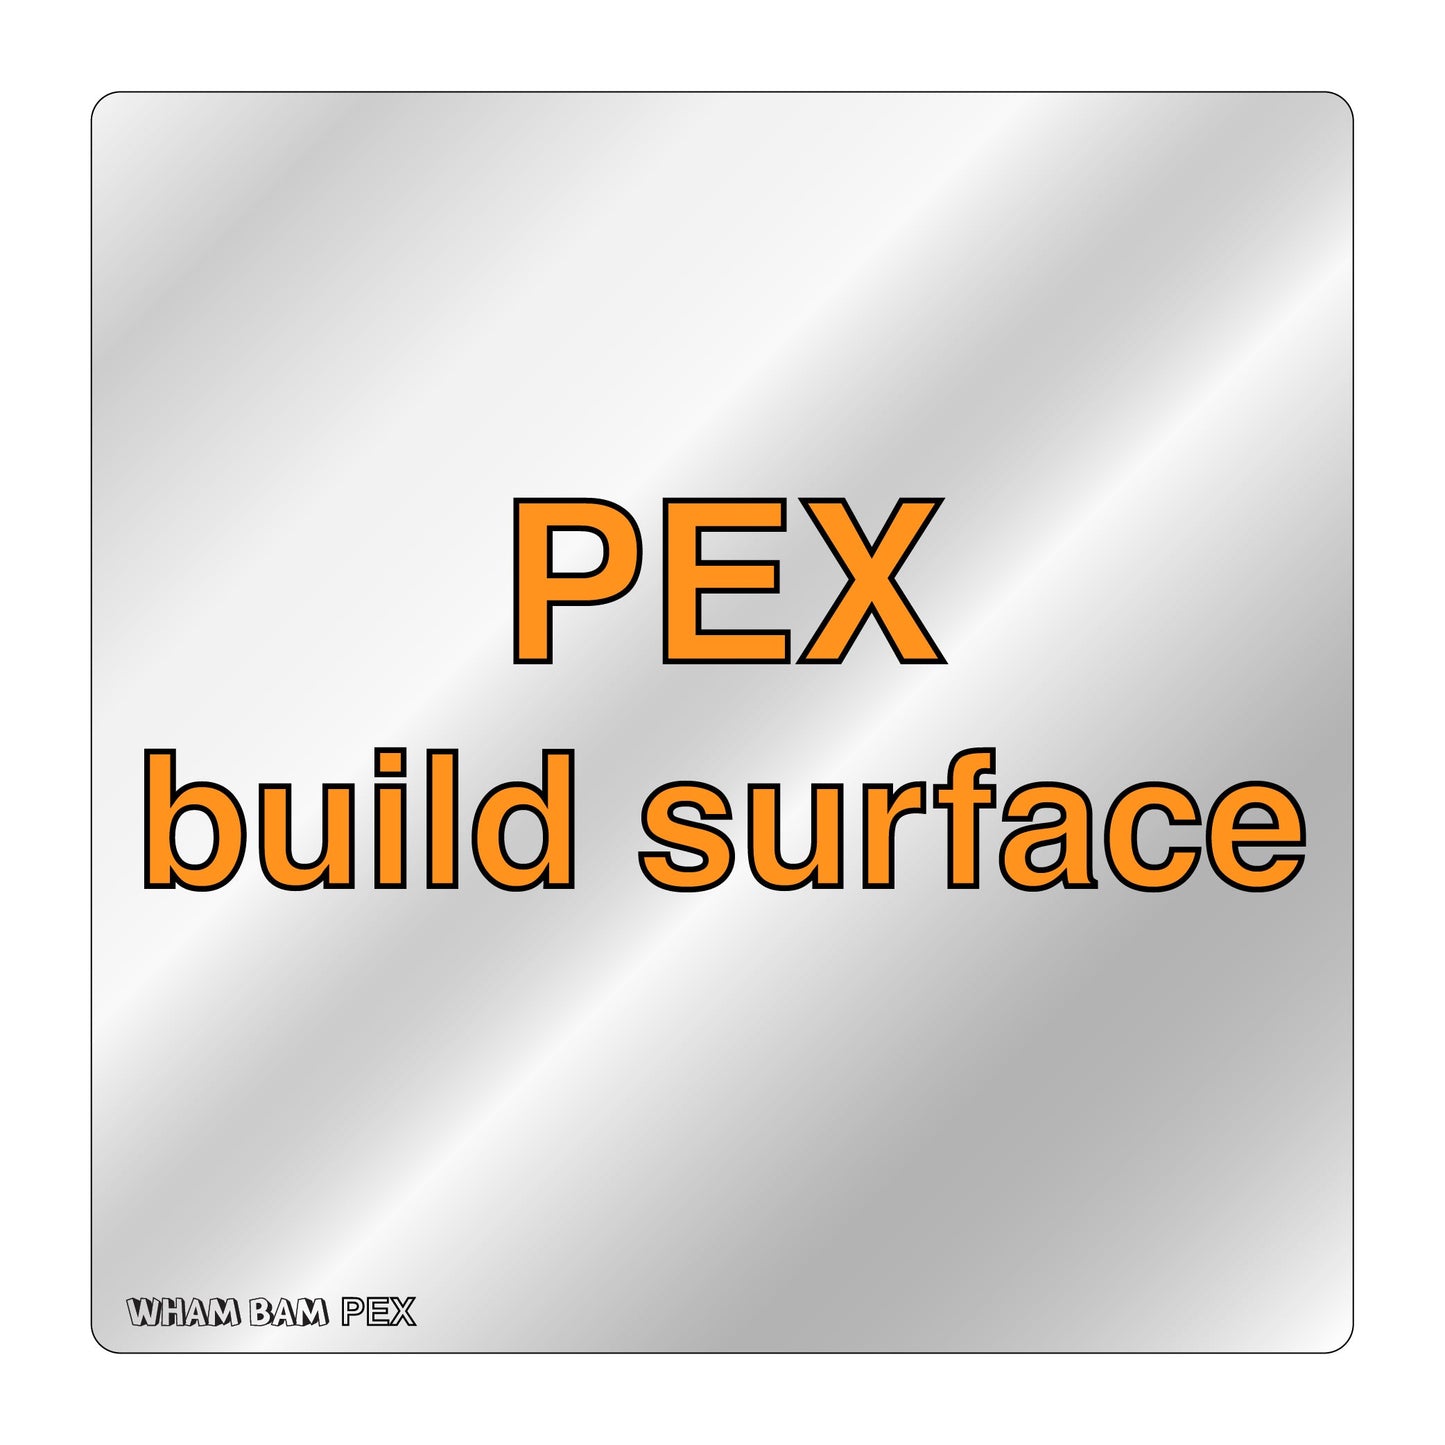 PEX Build Surface - 330 x 330 - Geeetech A30, Tronxy X3S  X5S